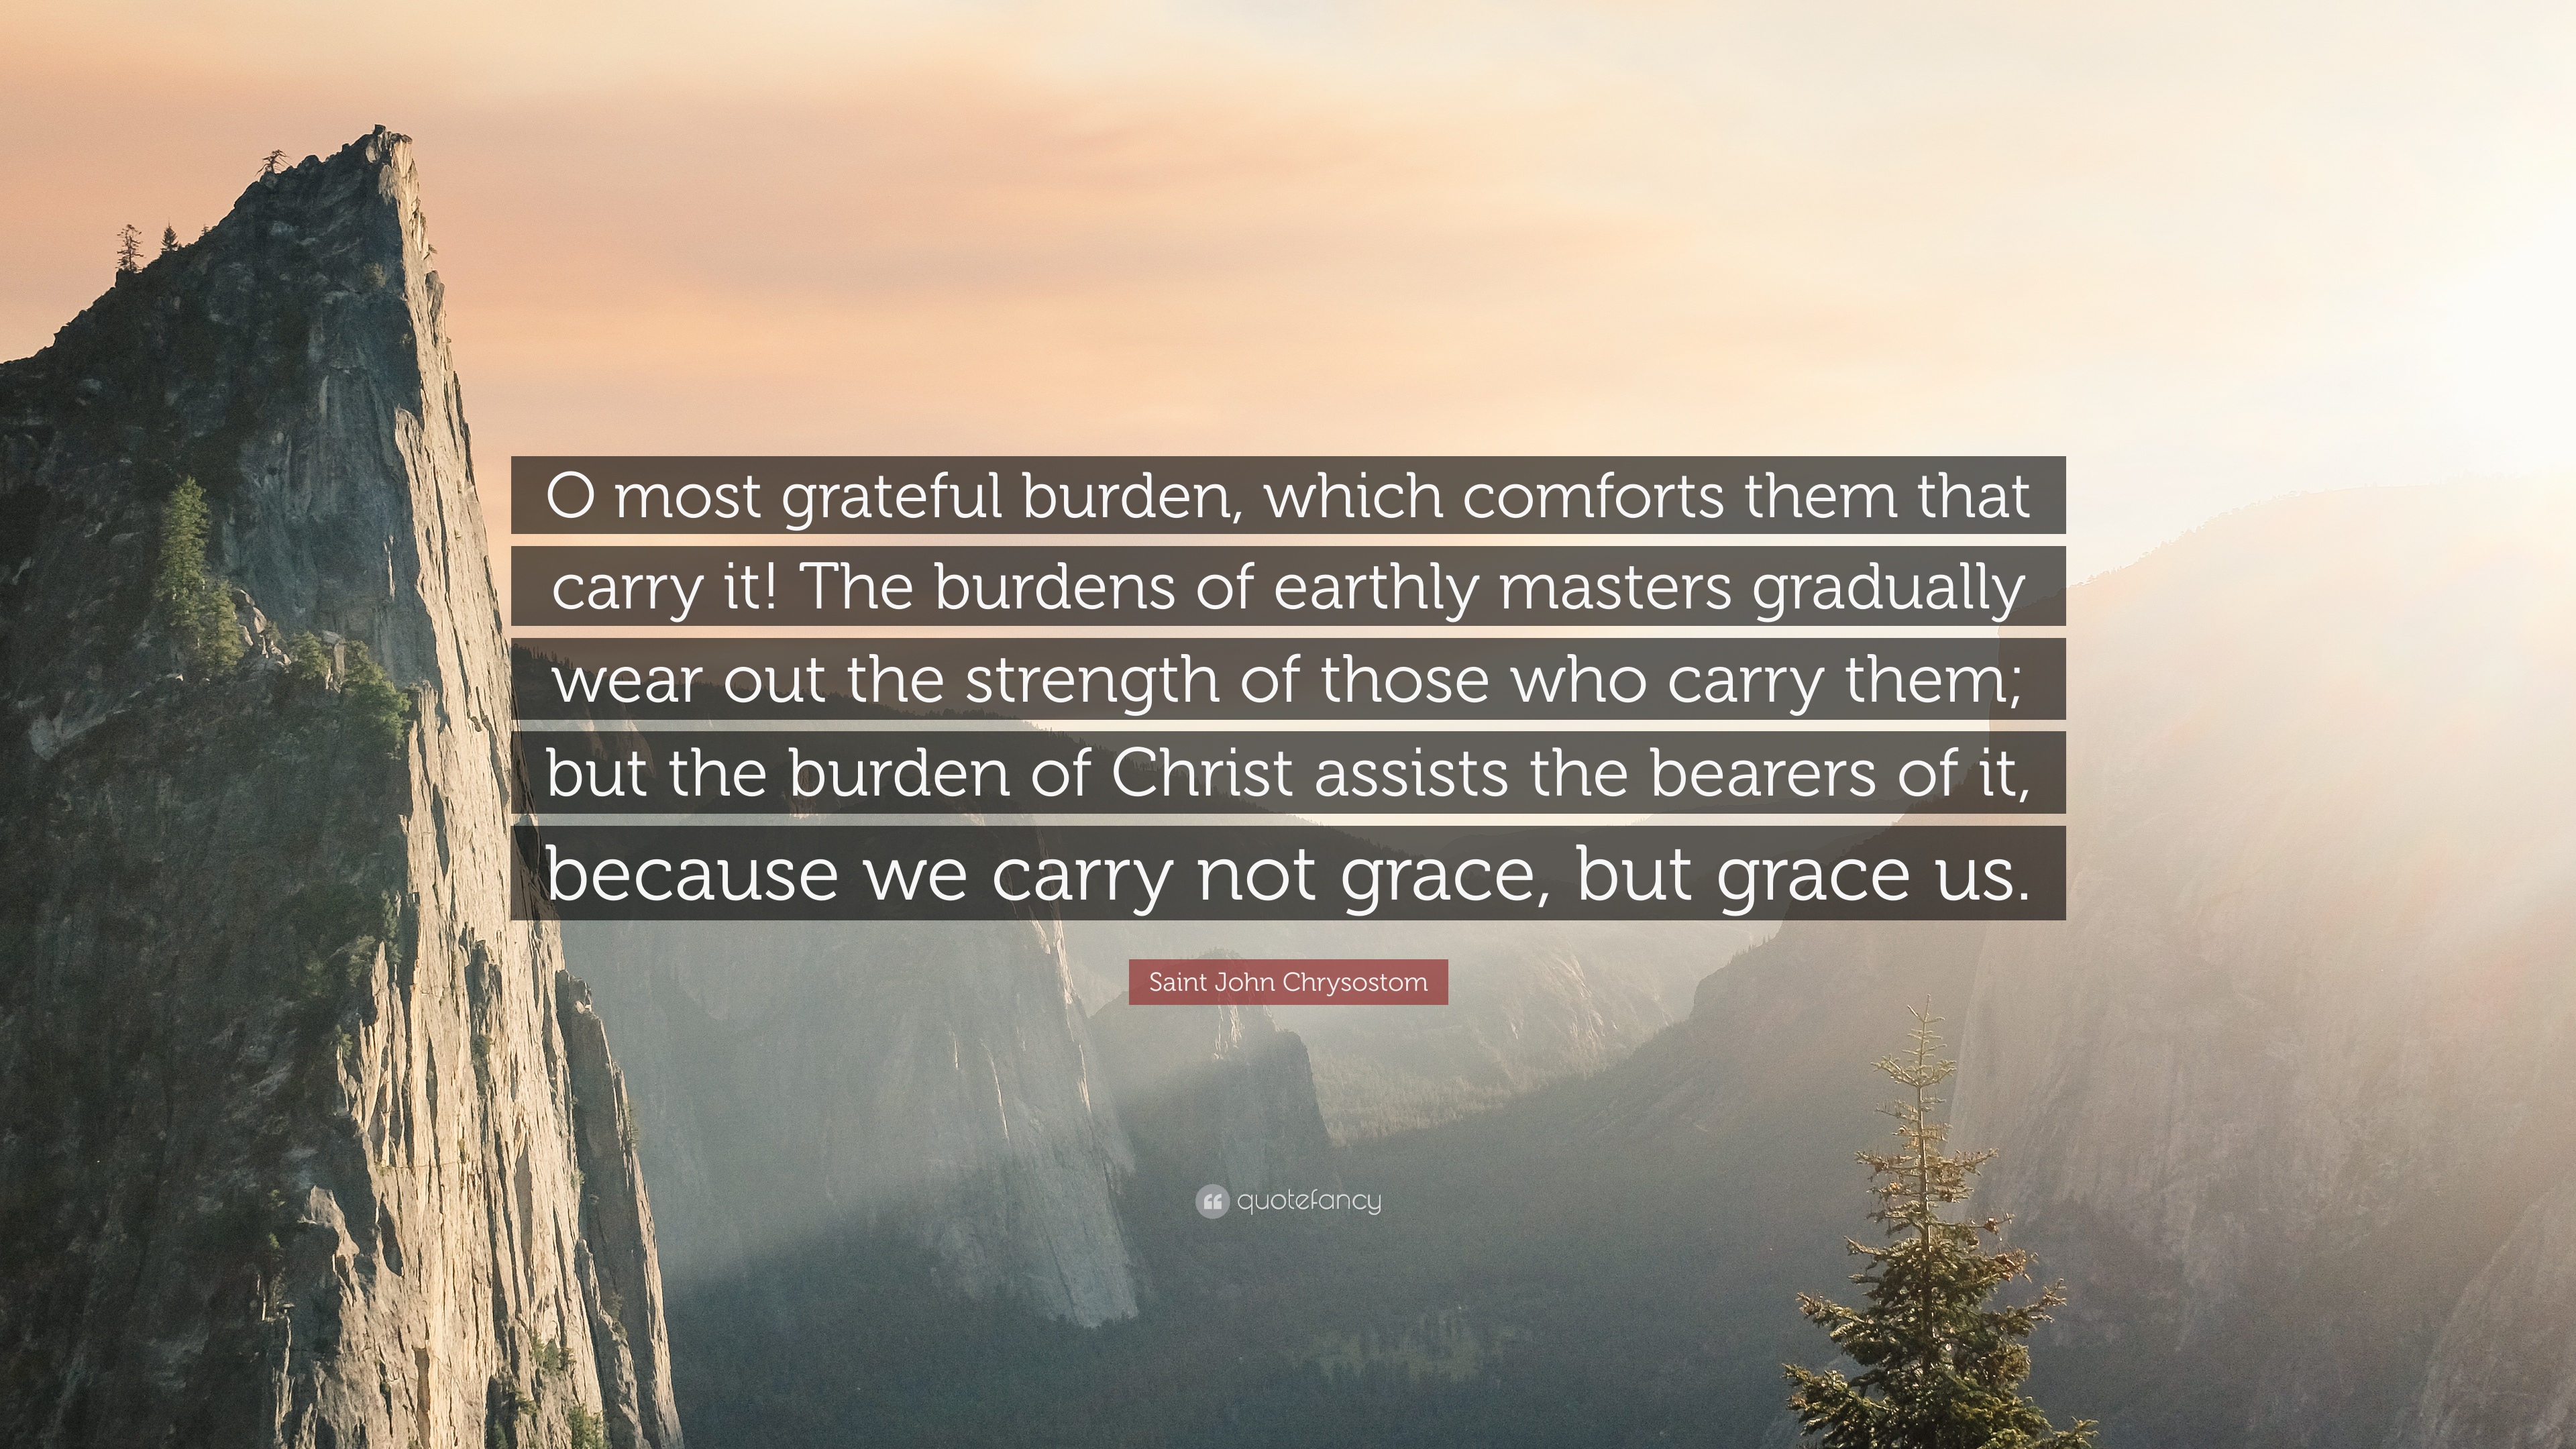 Saint John Chrysostom Quote: “O most grateful burden, which comforts ...